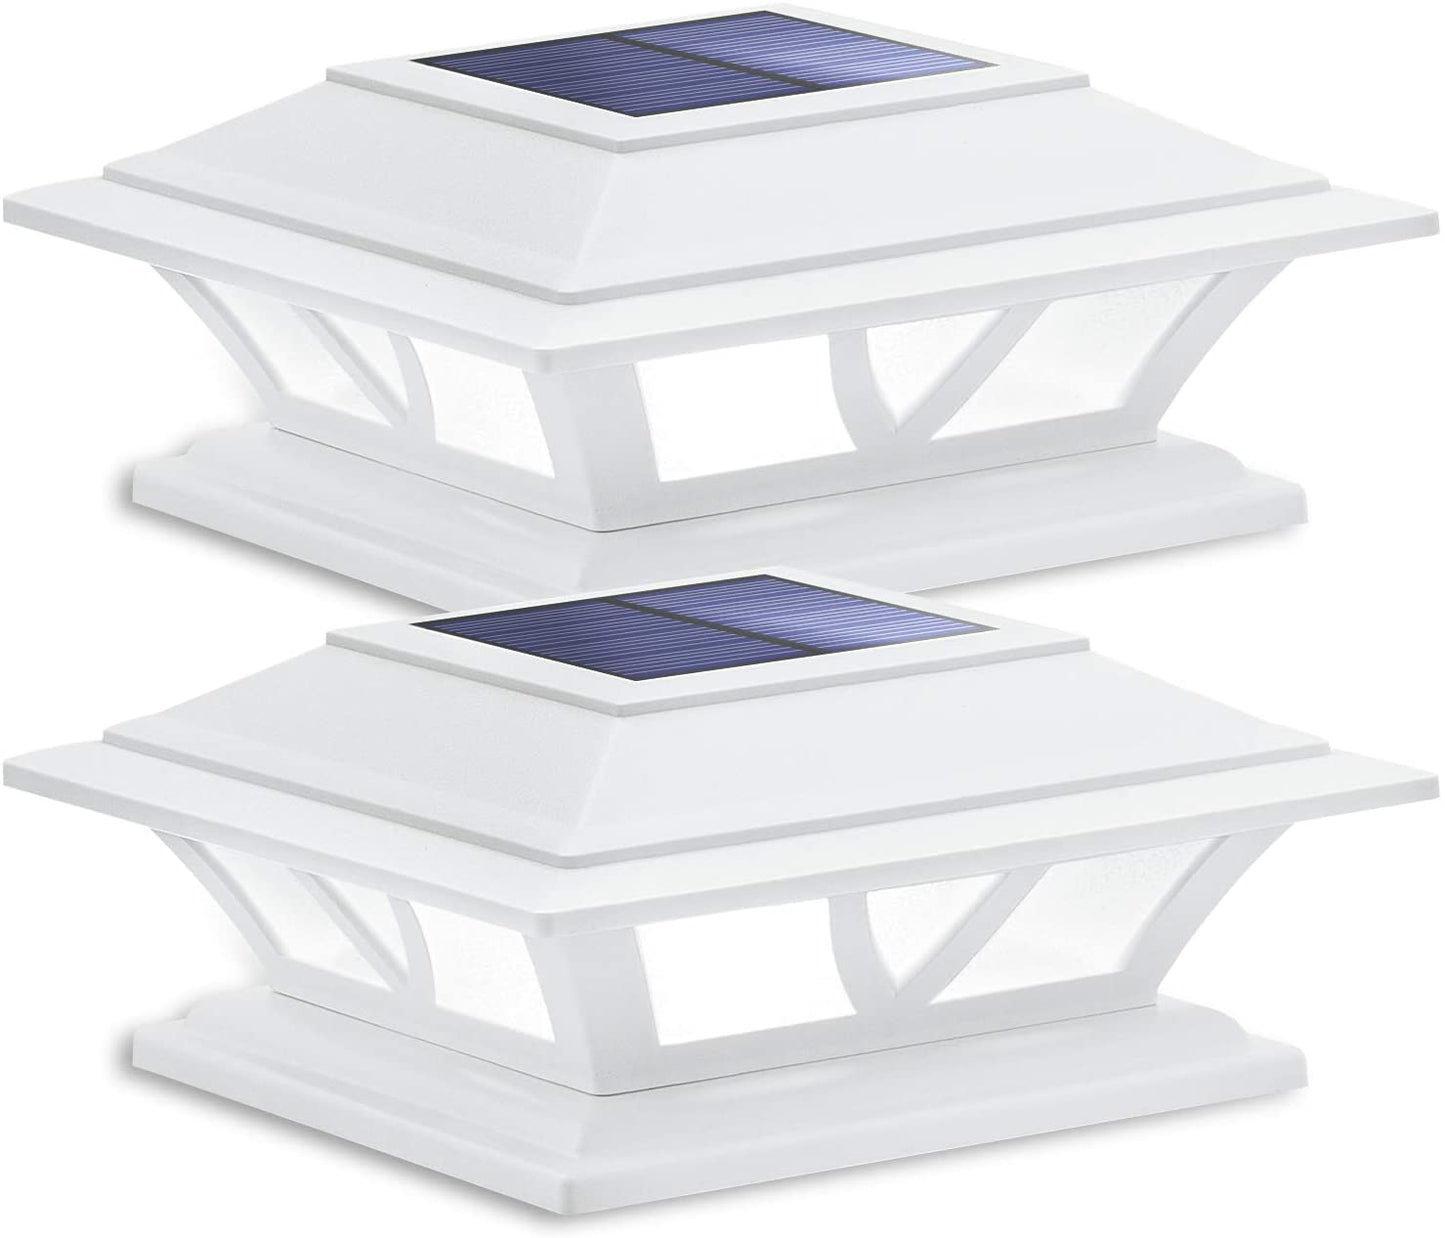 Siedinlar SD0116W Solar Post Lights Outdoor Modes LED Fence Deck Cap